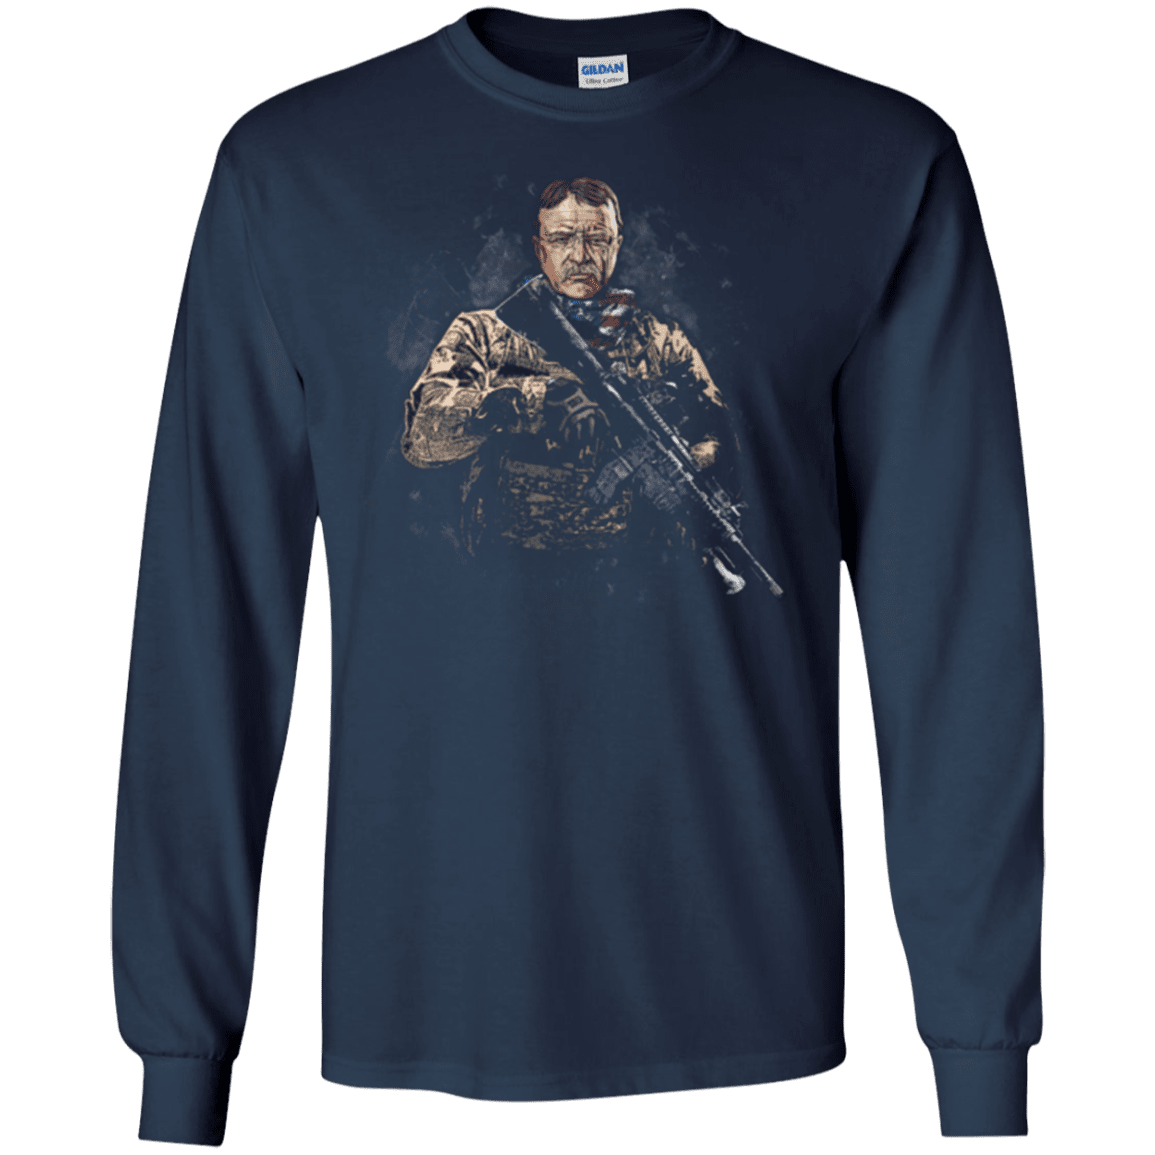 Military T-Shirt "Teddy Roosevelt Soldier Presidents"-TShirt-General-Veterans Nation